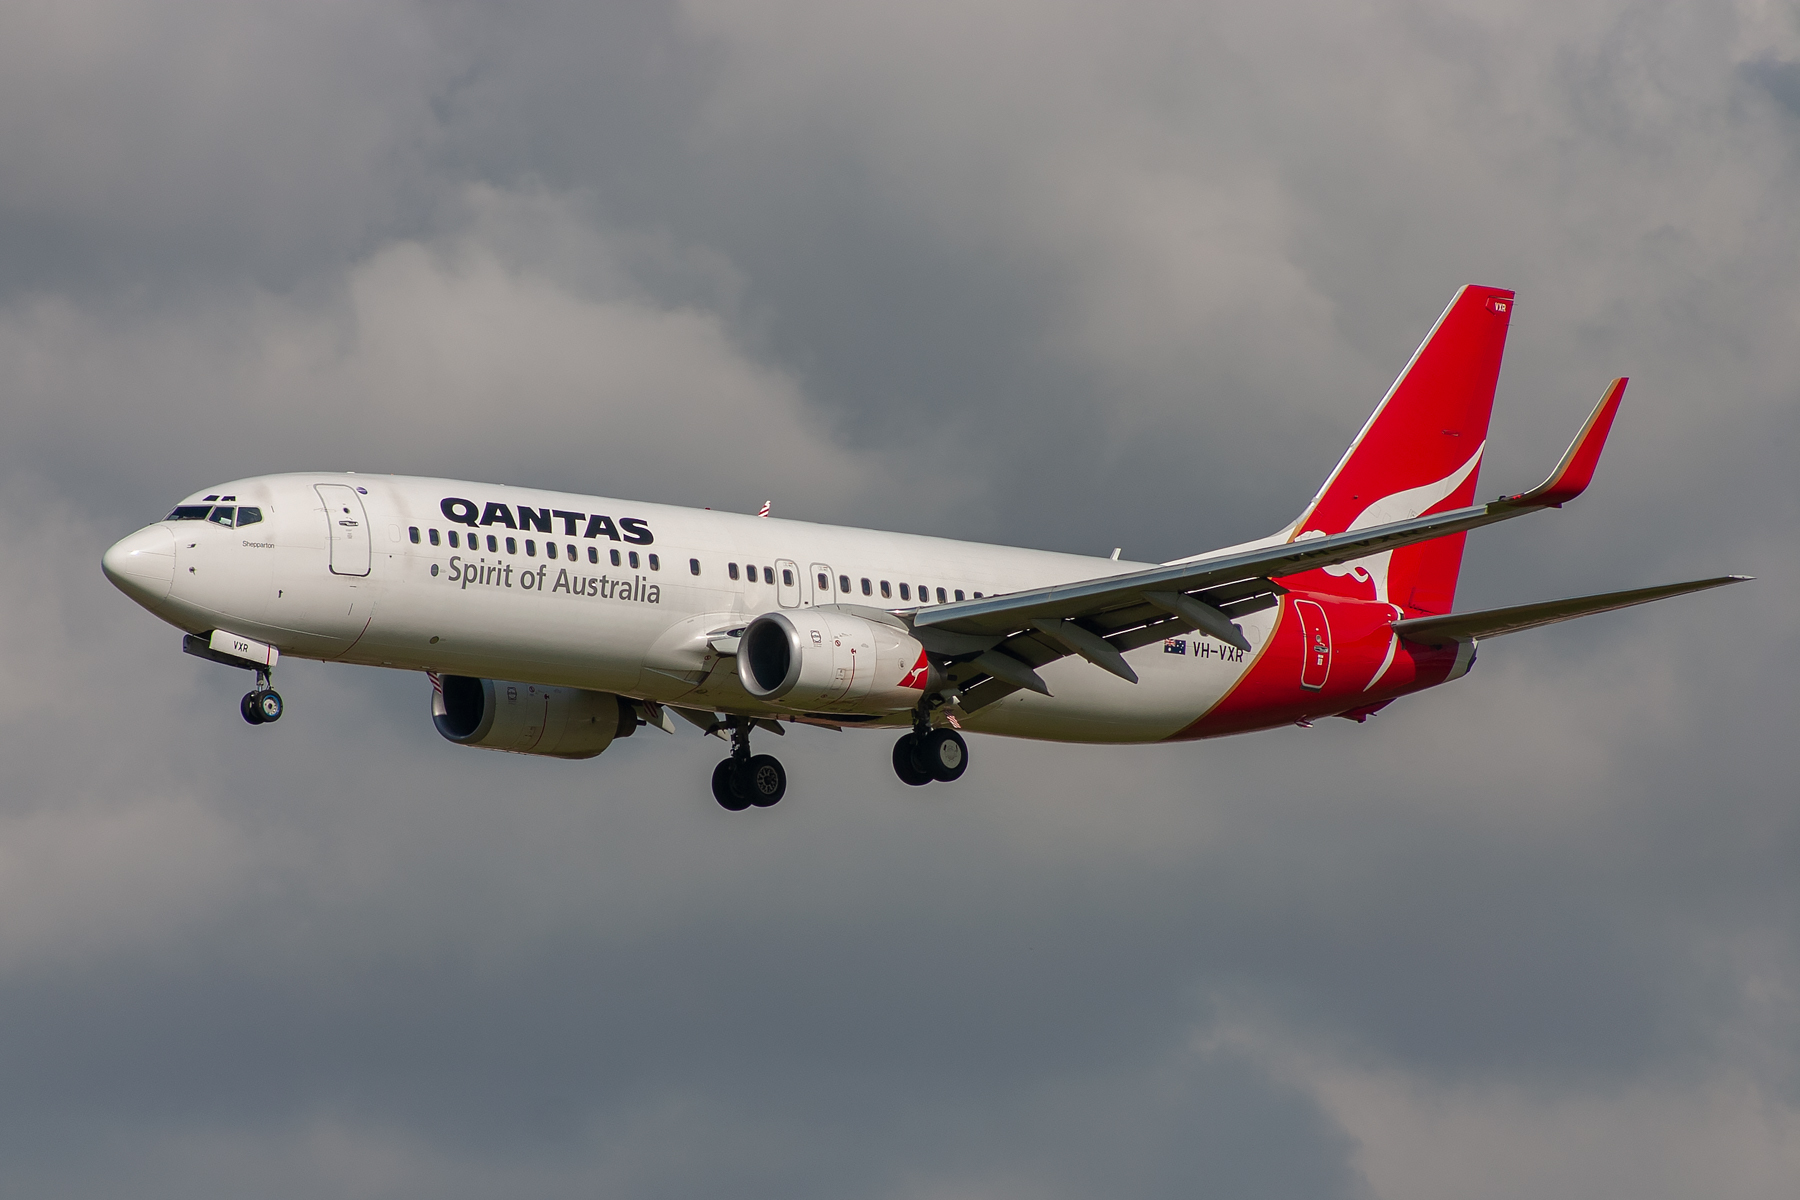 Qantas Boeing 737-800 VH-VXR at Kingsford Smith